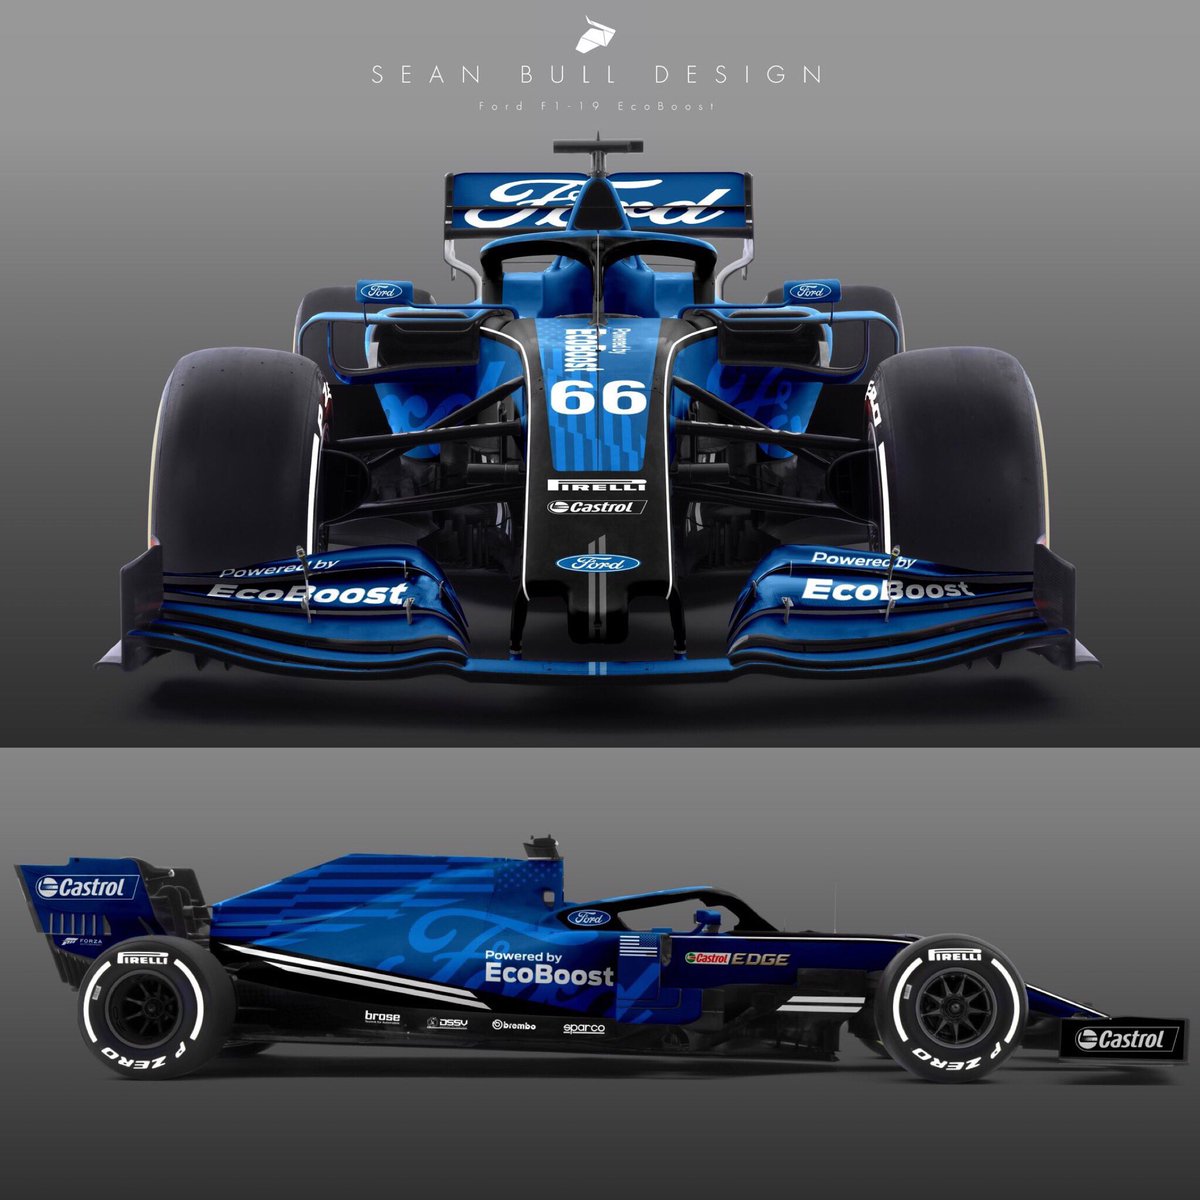 Sean Bull Design on Twitter: "F1 2019 Concept Liveries Thread: 1. Ford...